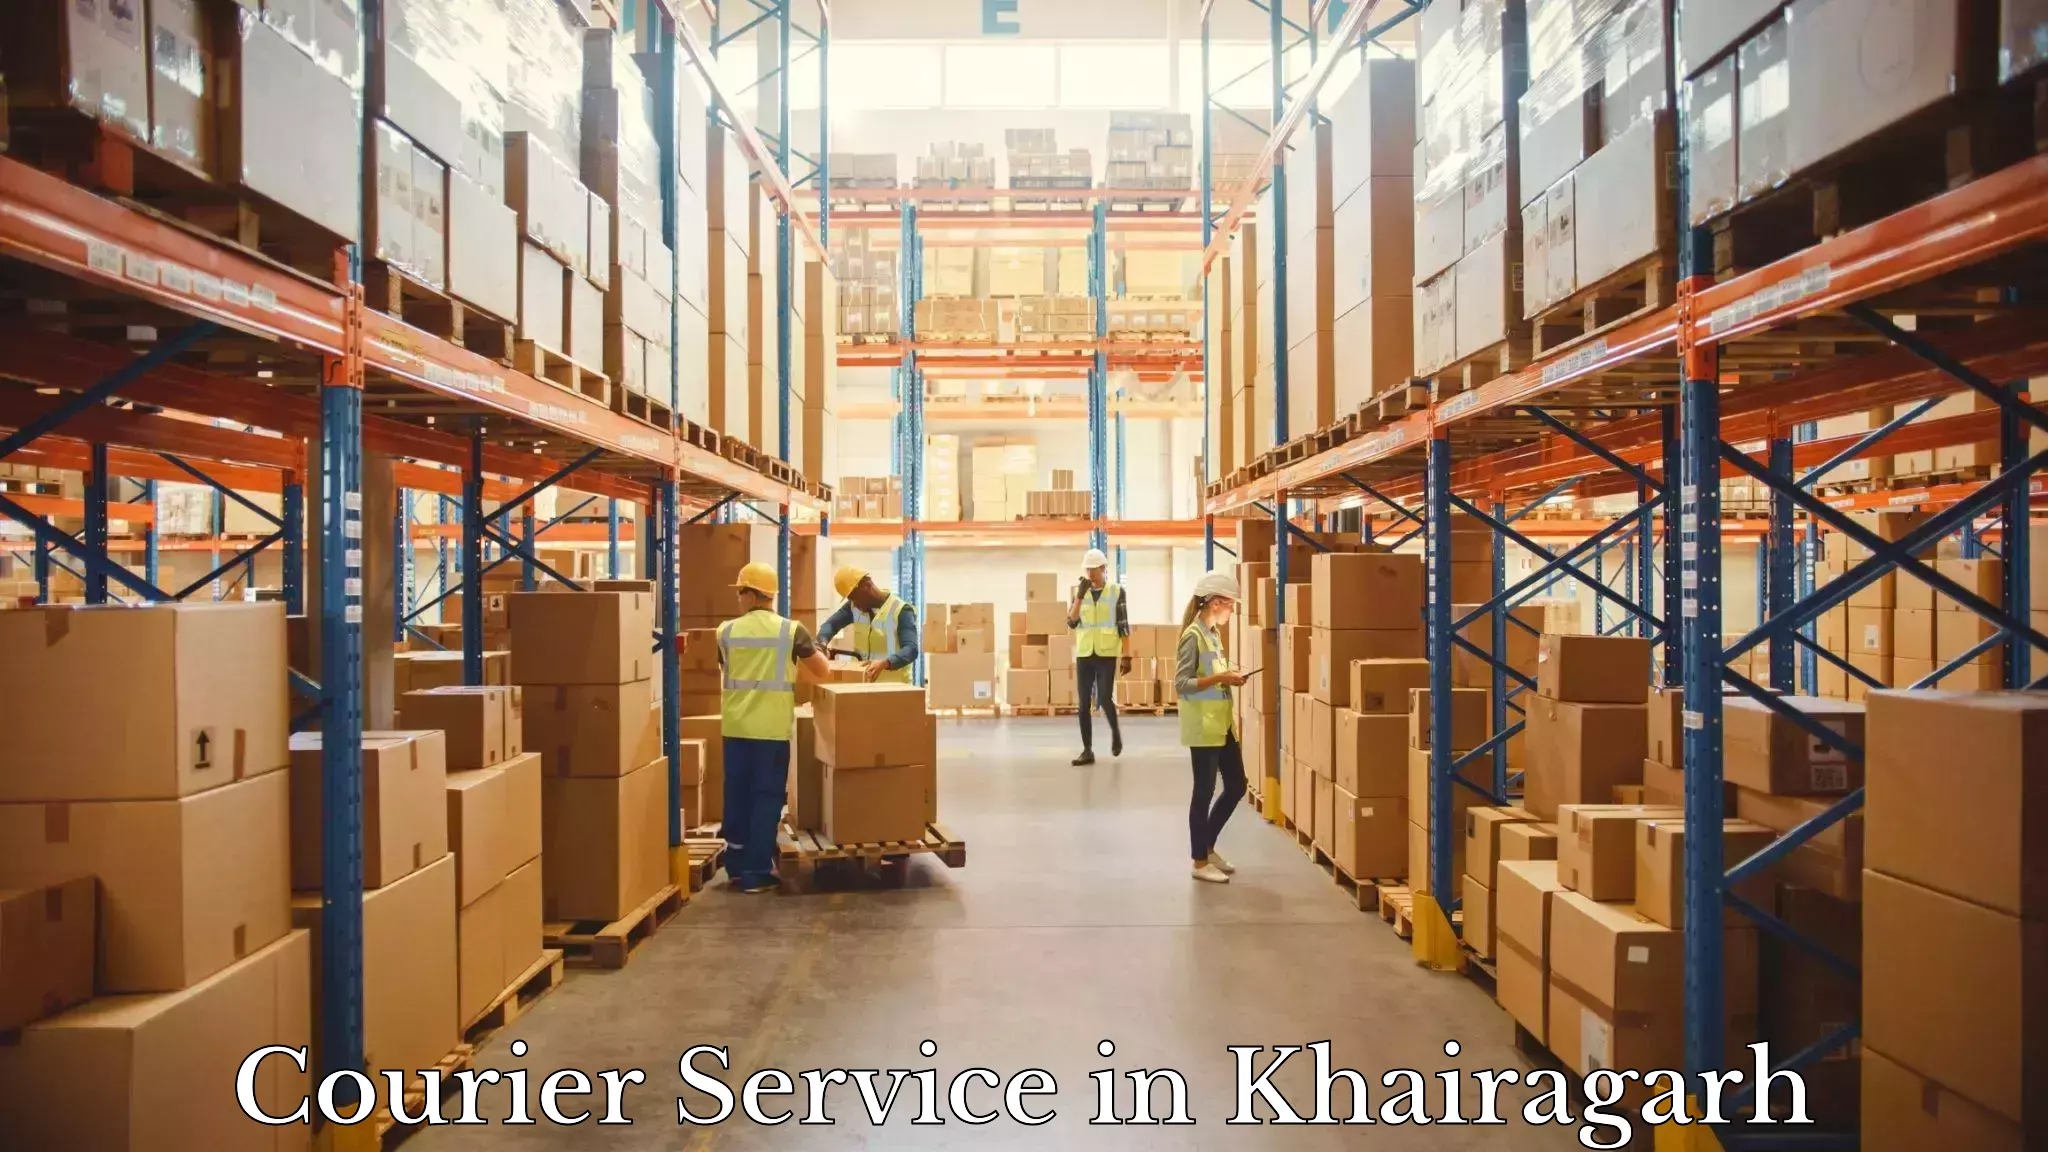 High-performance logistics in Khairagarh